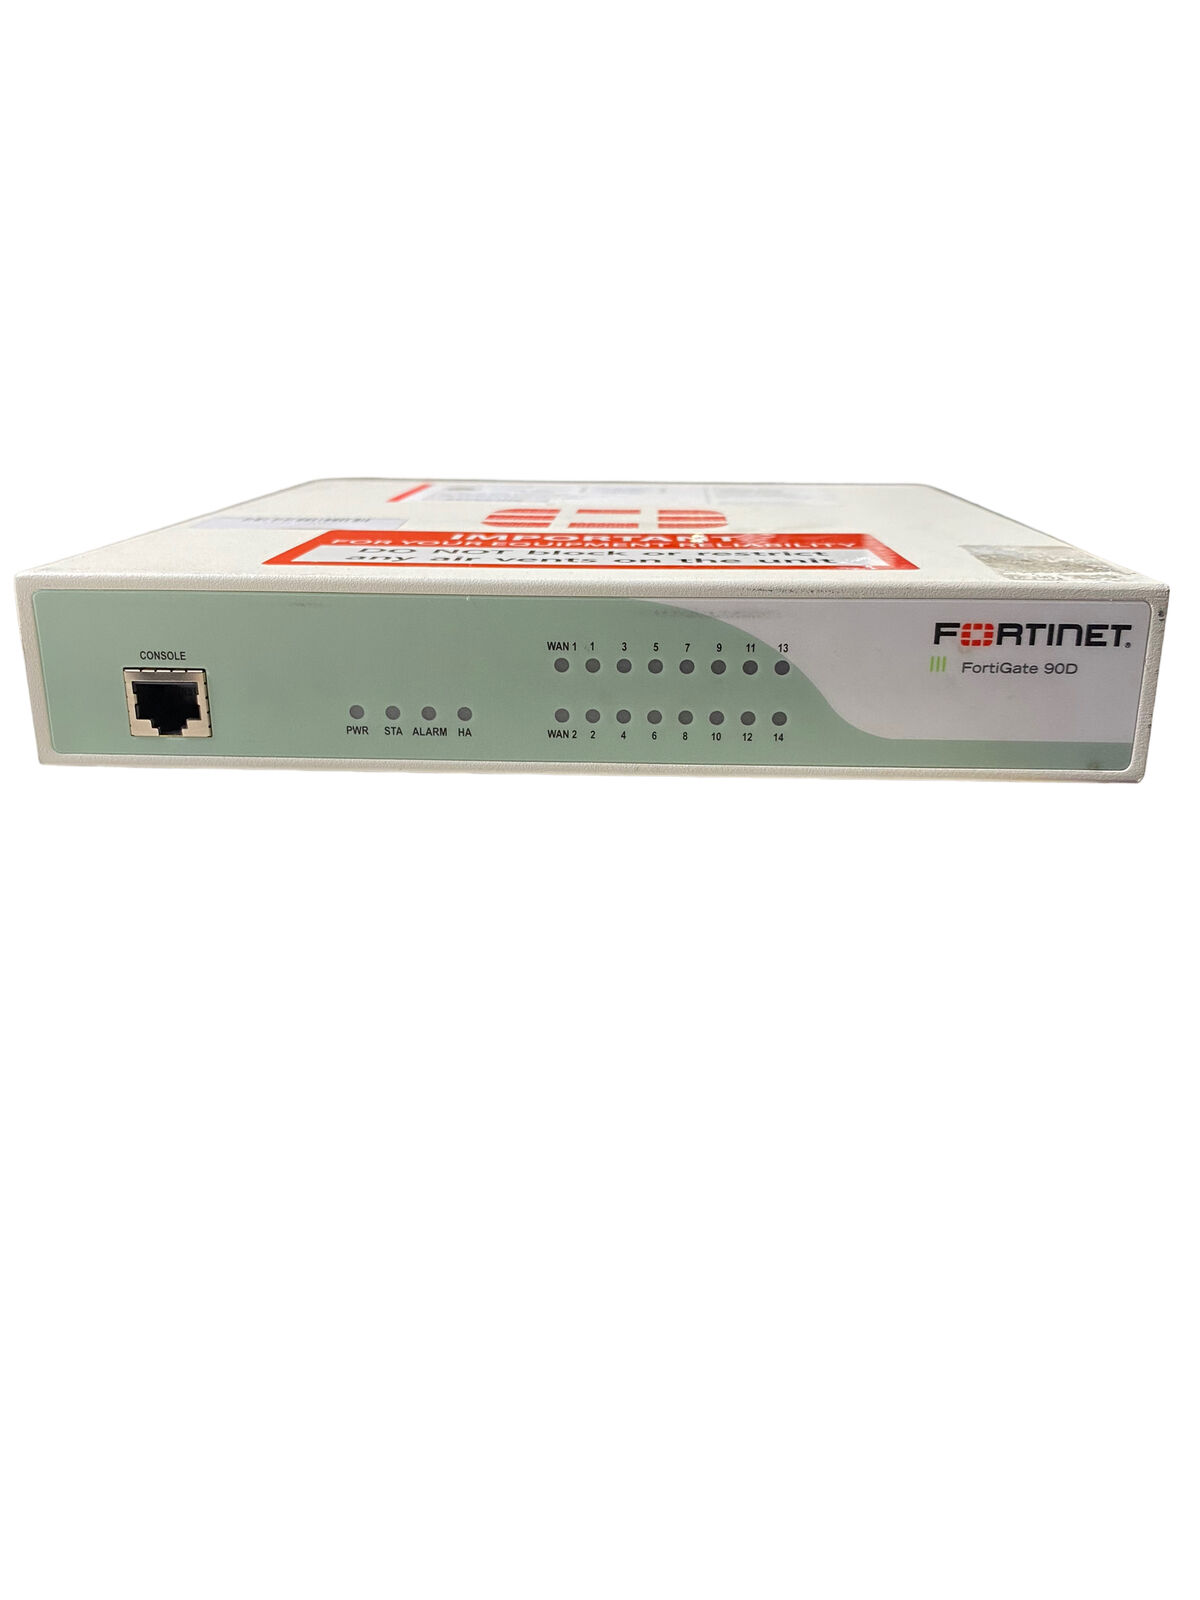 Fortinet FortiGate 90D Firewall Network Security Appliance FG-90D VPN